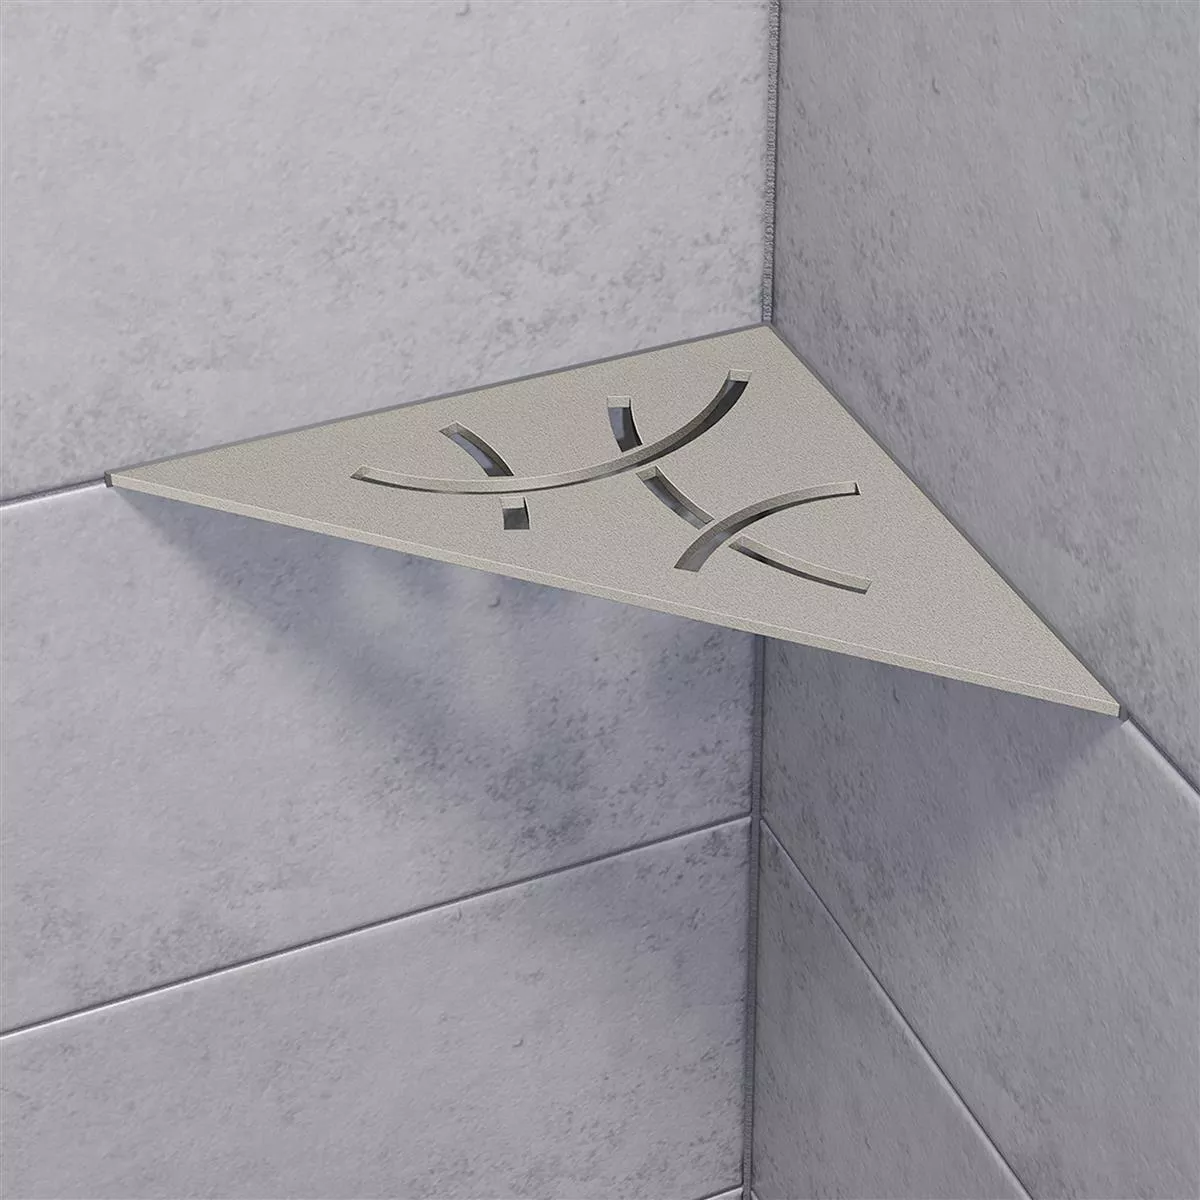 Schlüter wall shelf triangle 21x21cm Curve gray